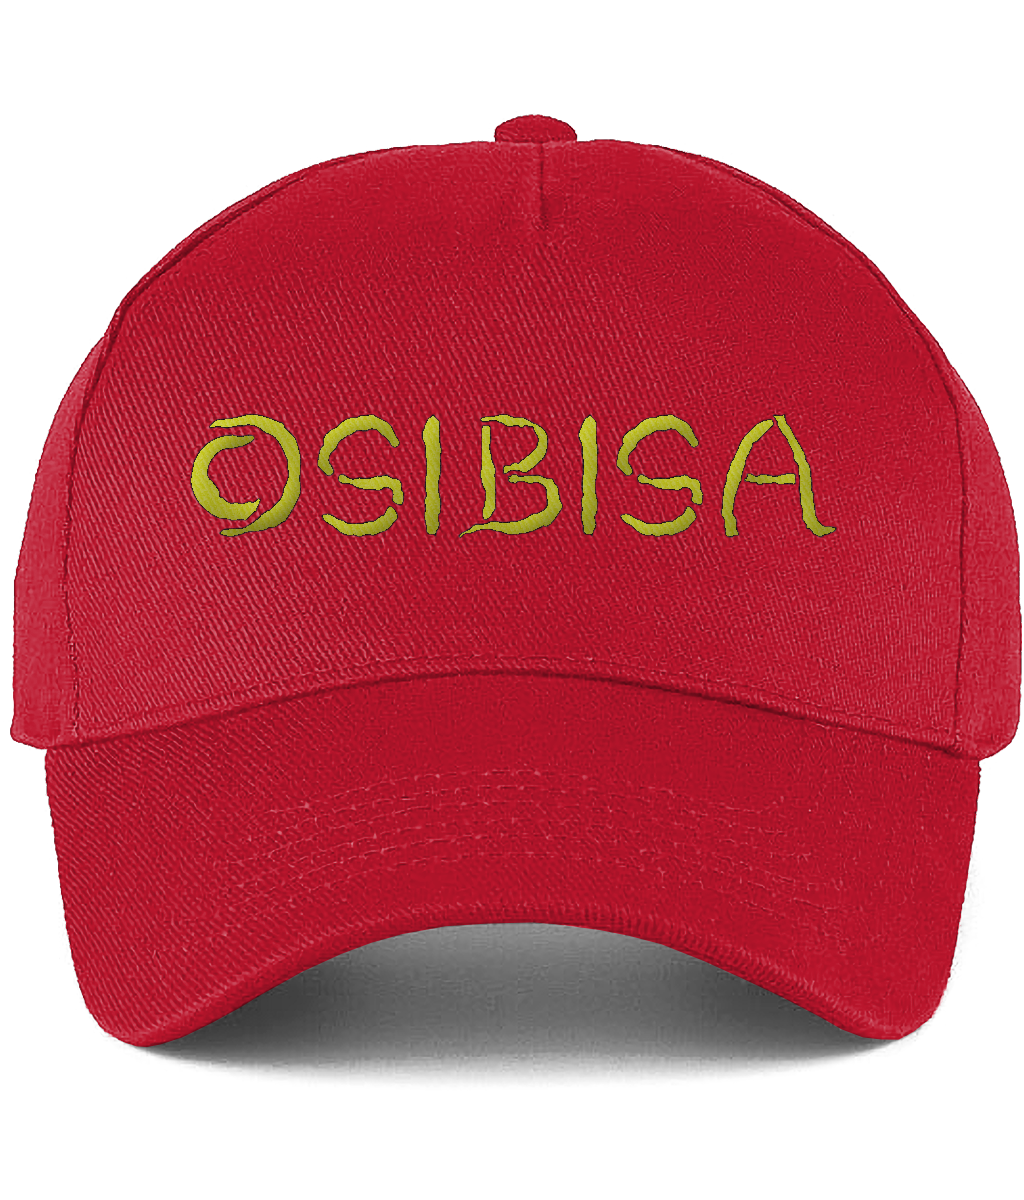 Osibisa Baseball Cap